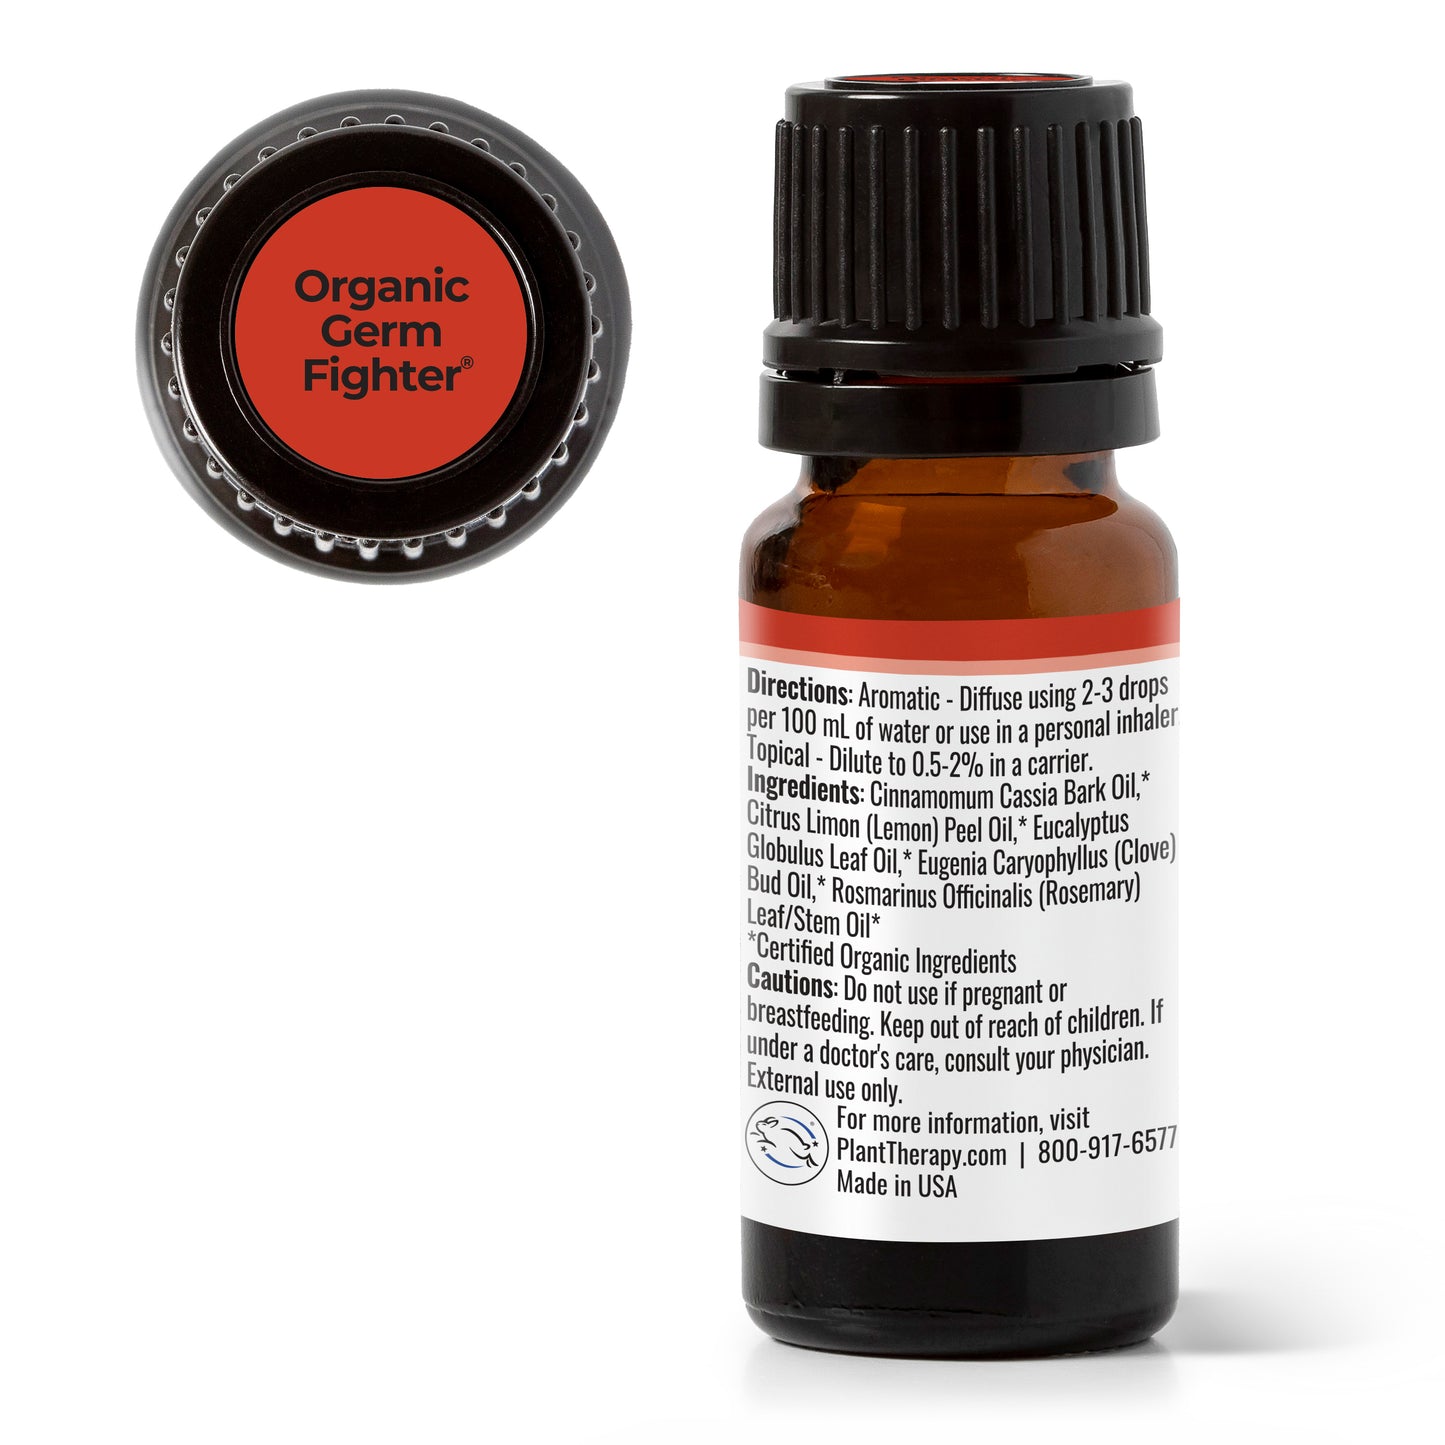 Organic Germ Fighter Essential Oil back label